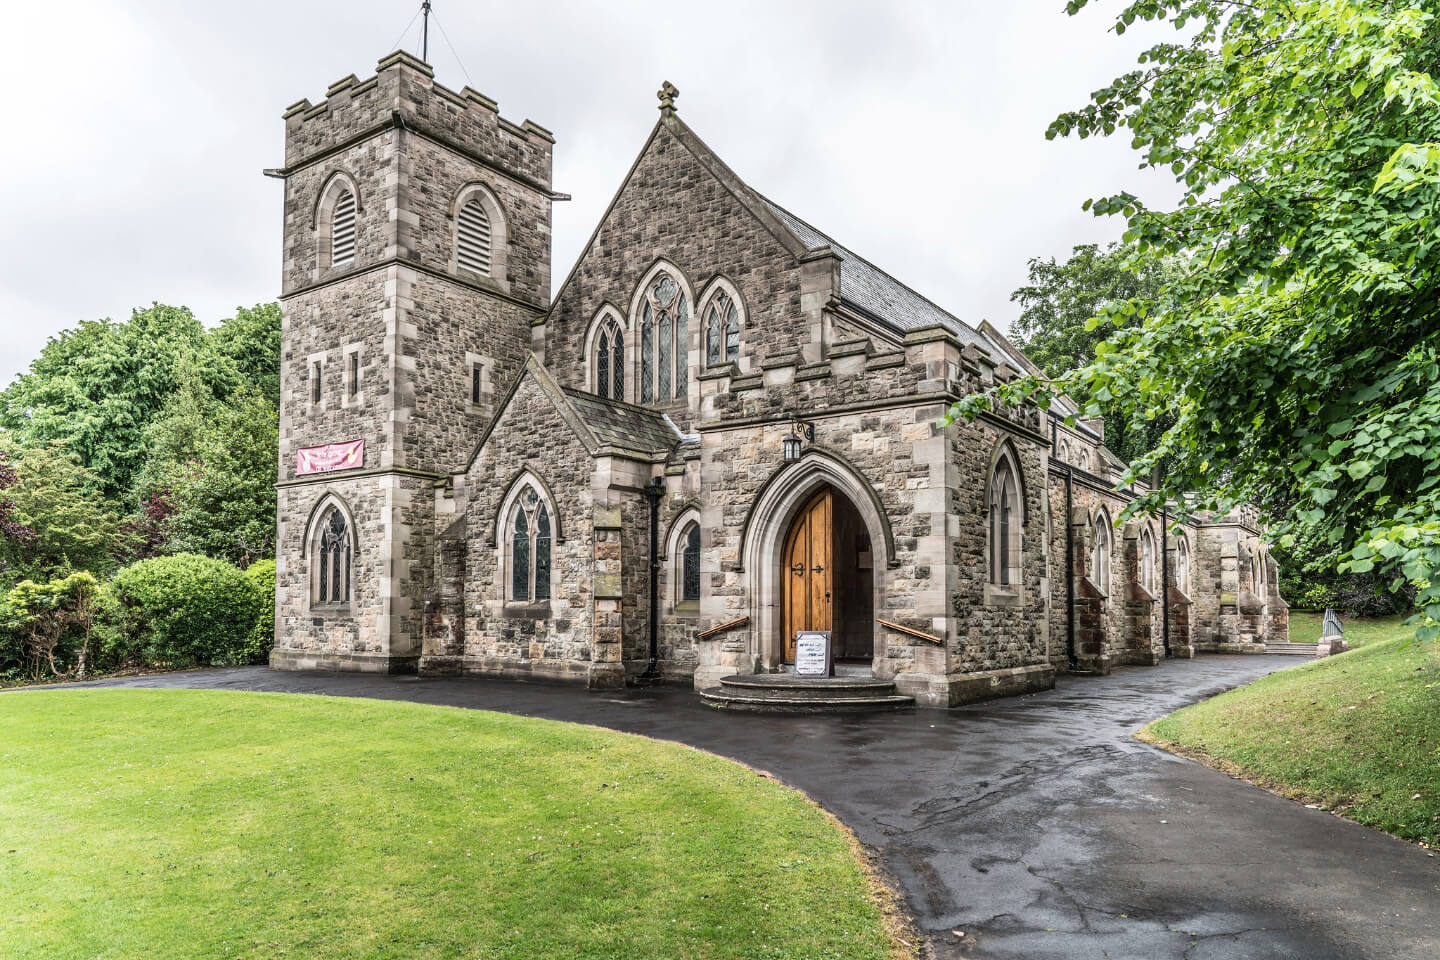 Student Accommodation in Stranmillis, Belfast - St Bartholomew's Church